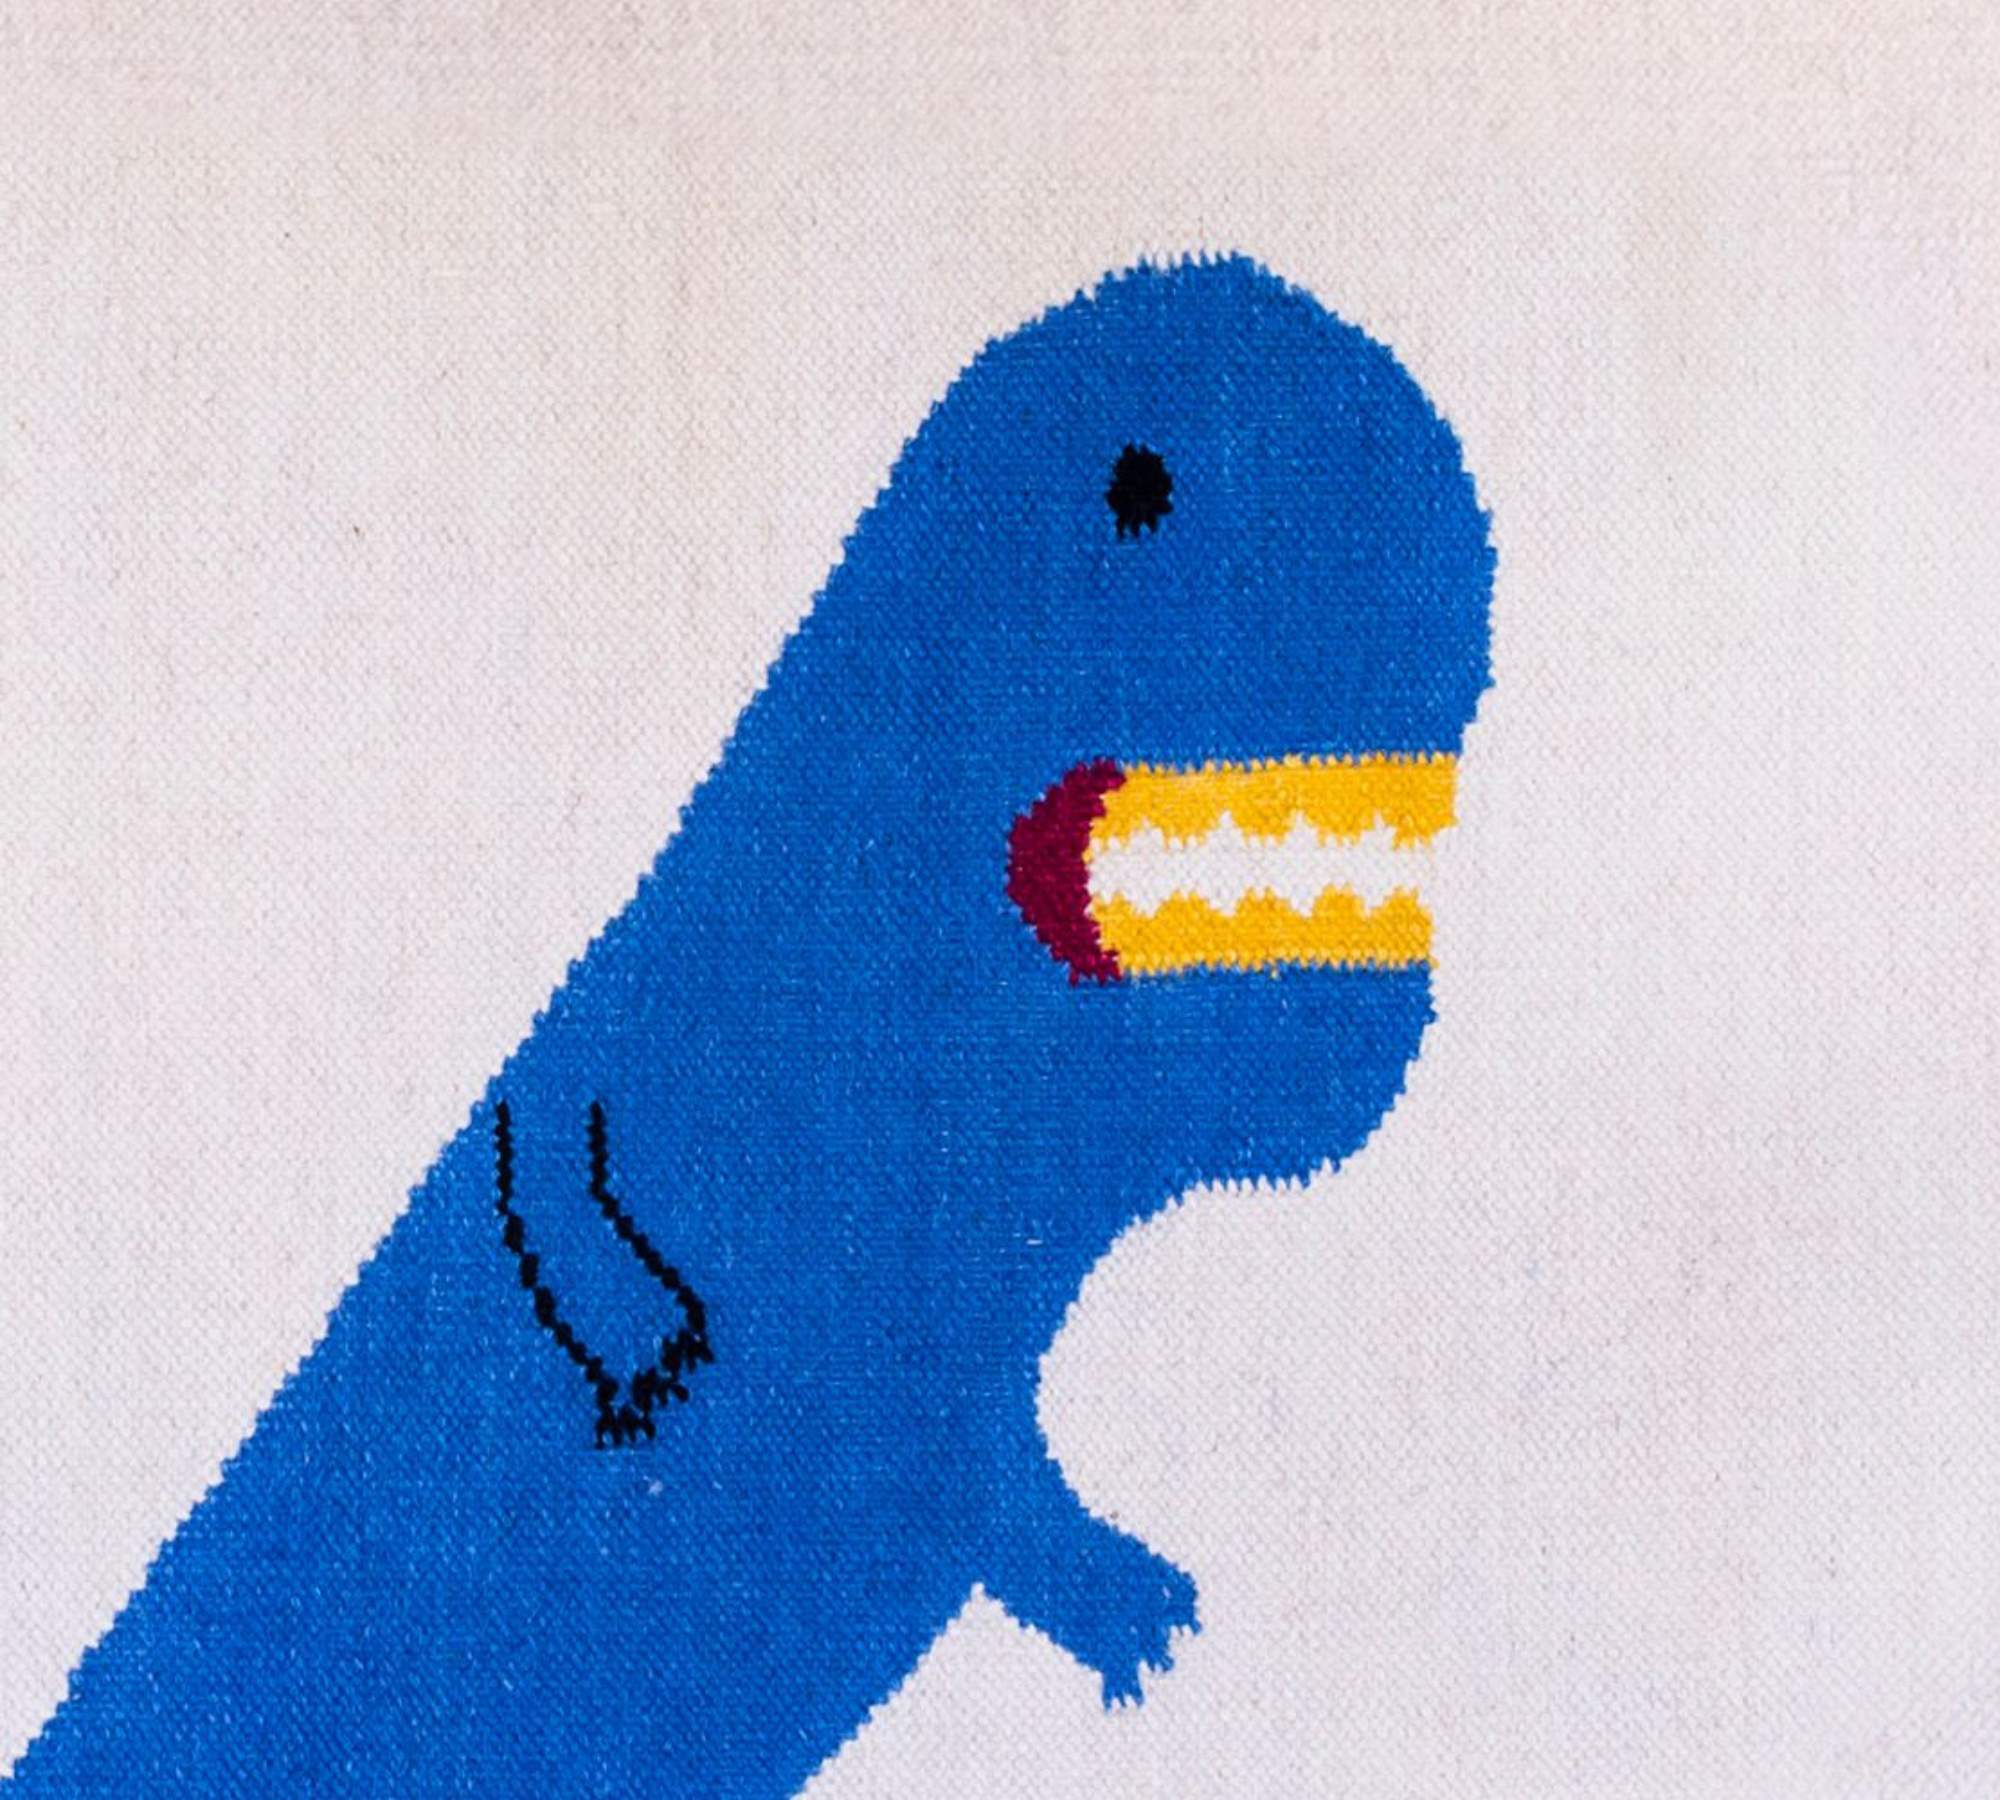 Kinder-Teppich Dinosaurier Blau 90 x 150 cm